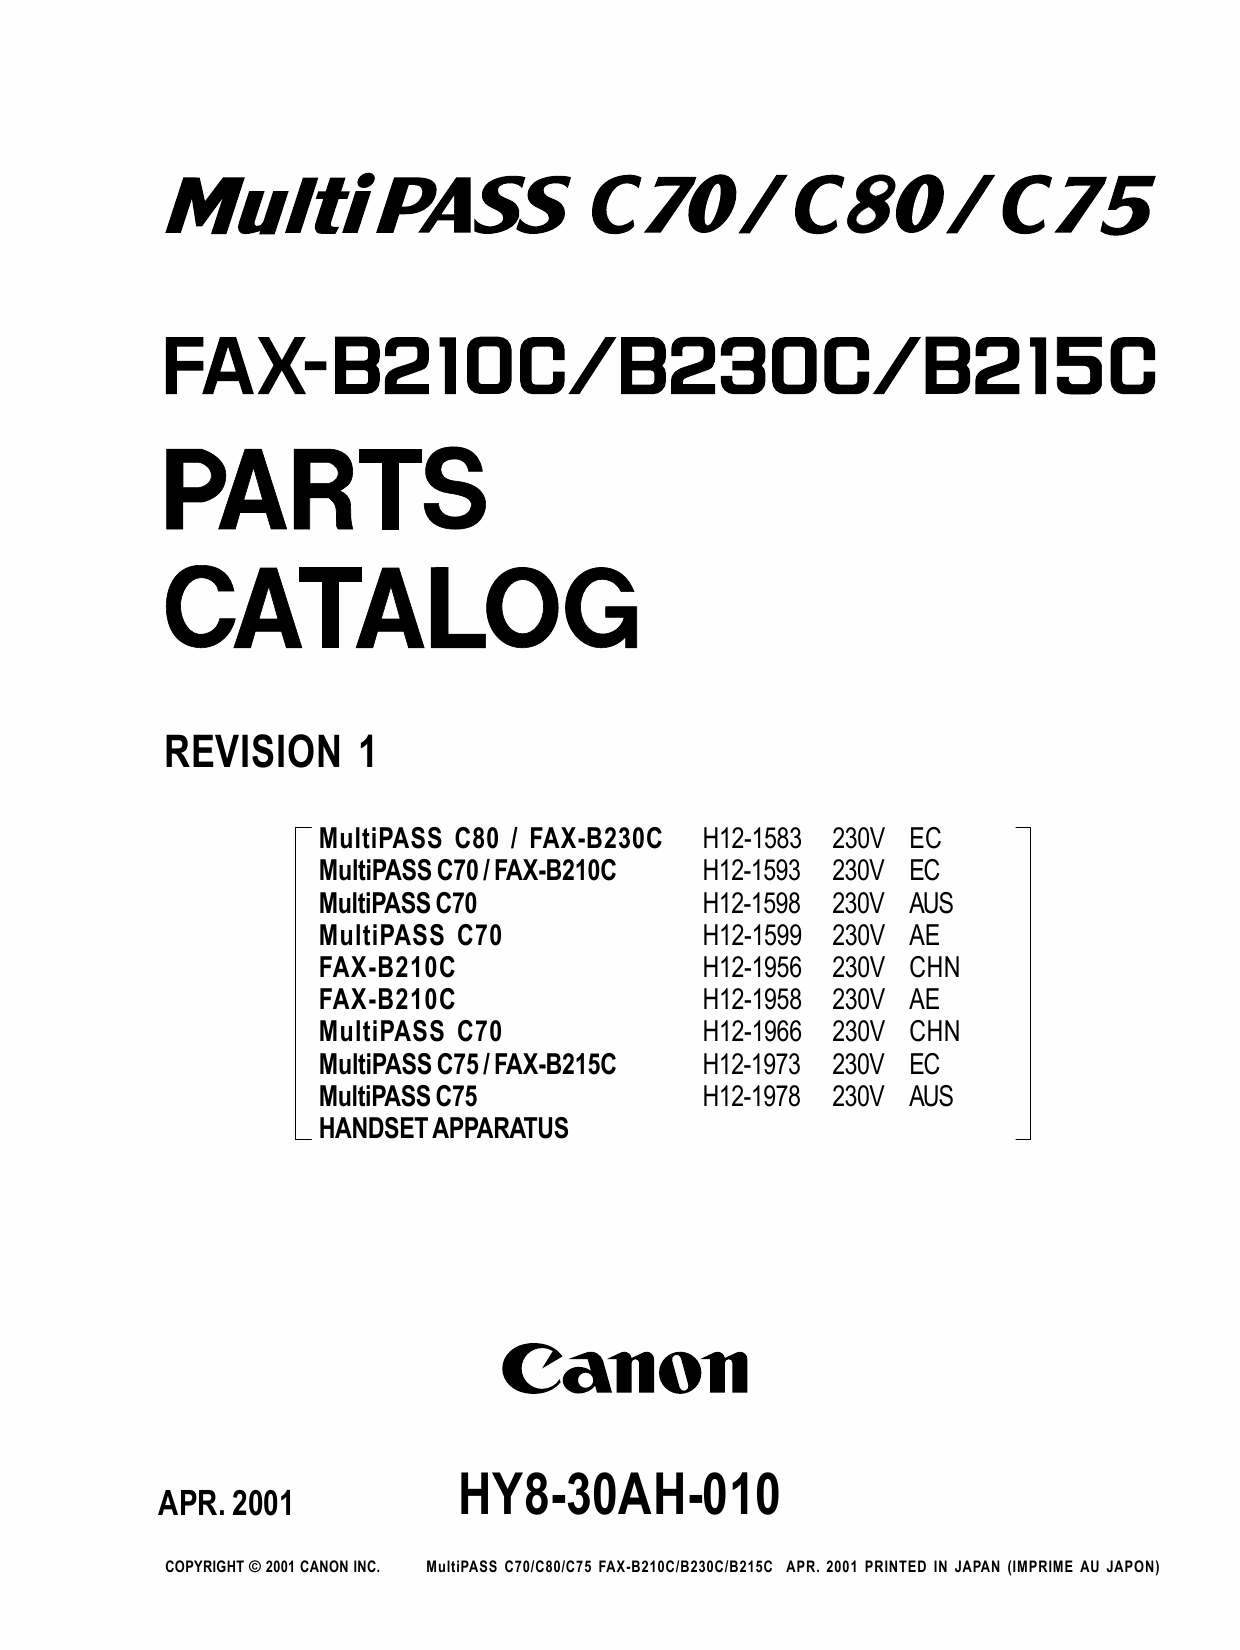 Canon MultiPASS MP-C70 C80 C75 Parts Catalog Manual-1